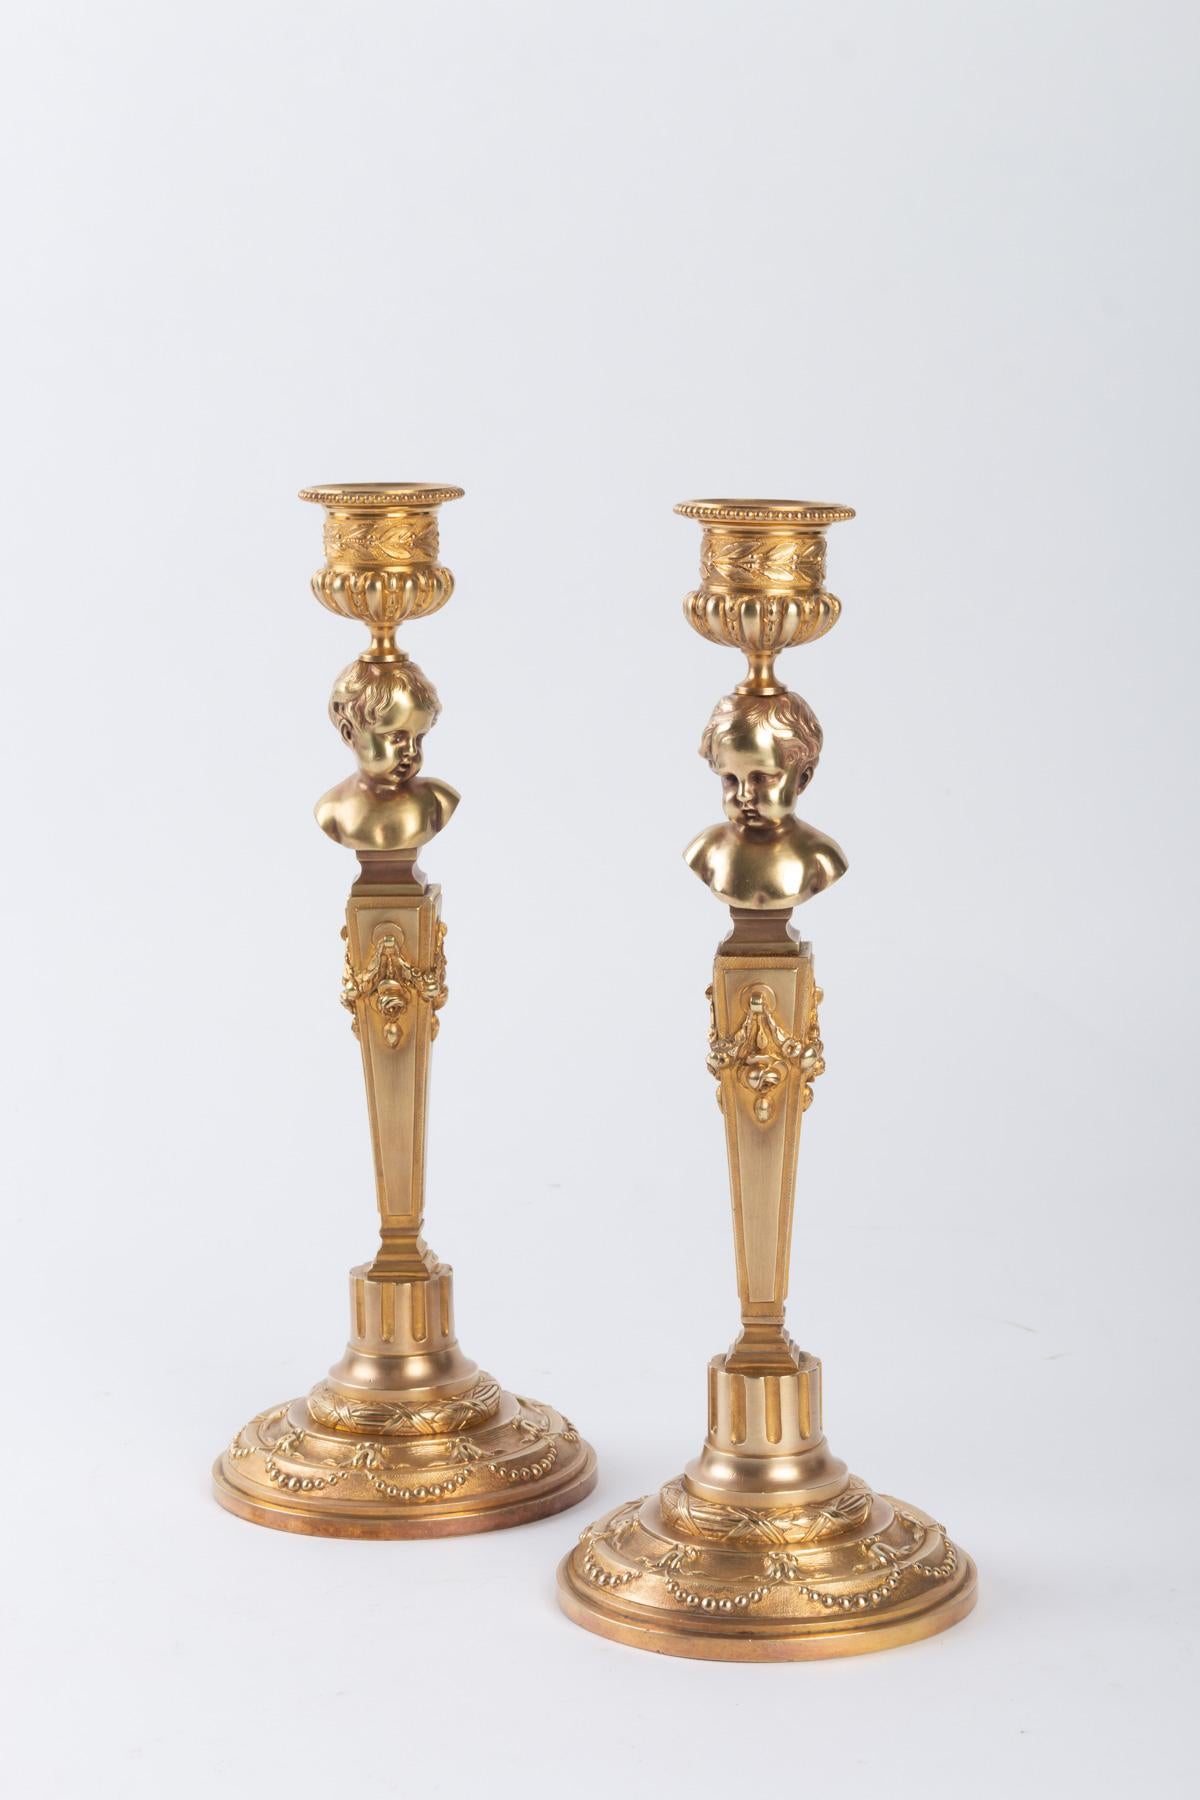 Pair of gilt bronze candelabras. French work, circa 1900.
Measures: H 25.5 cm, D 10 cm.